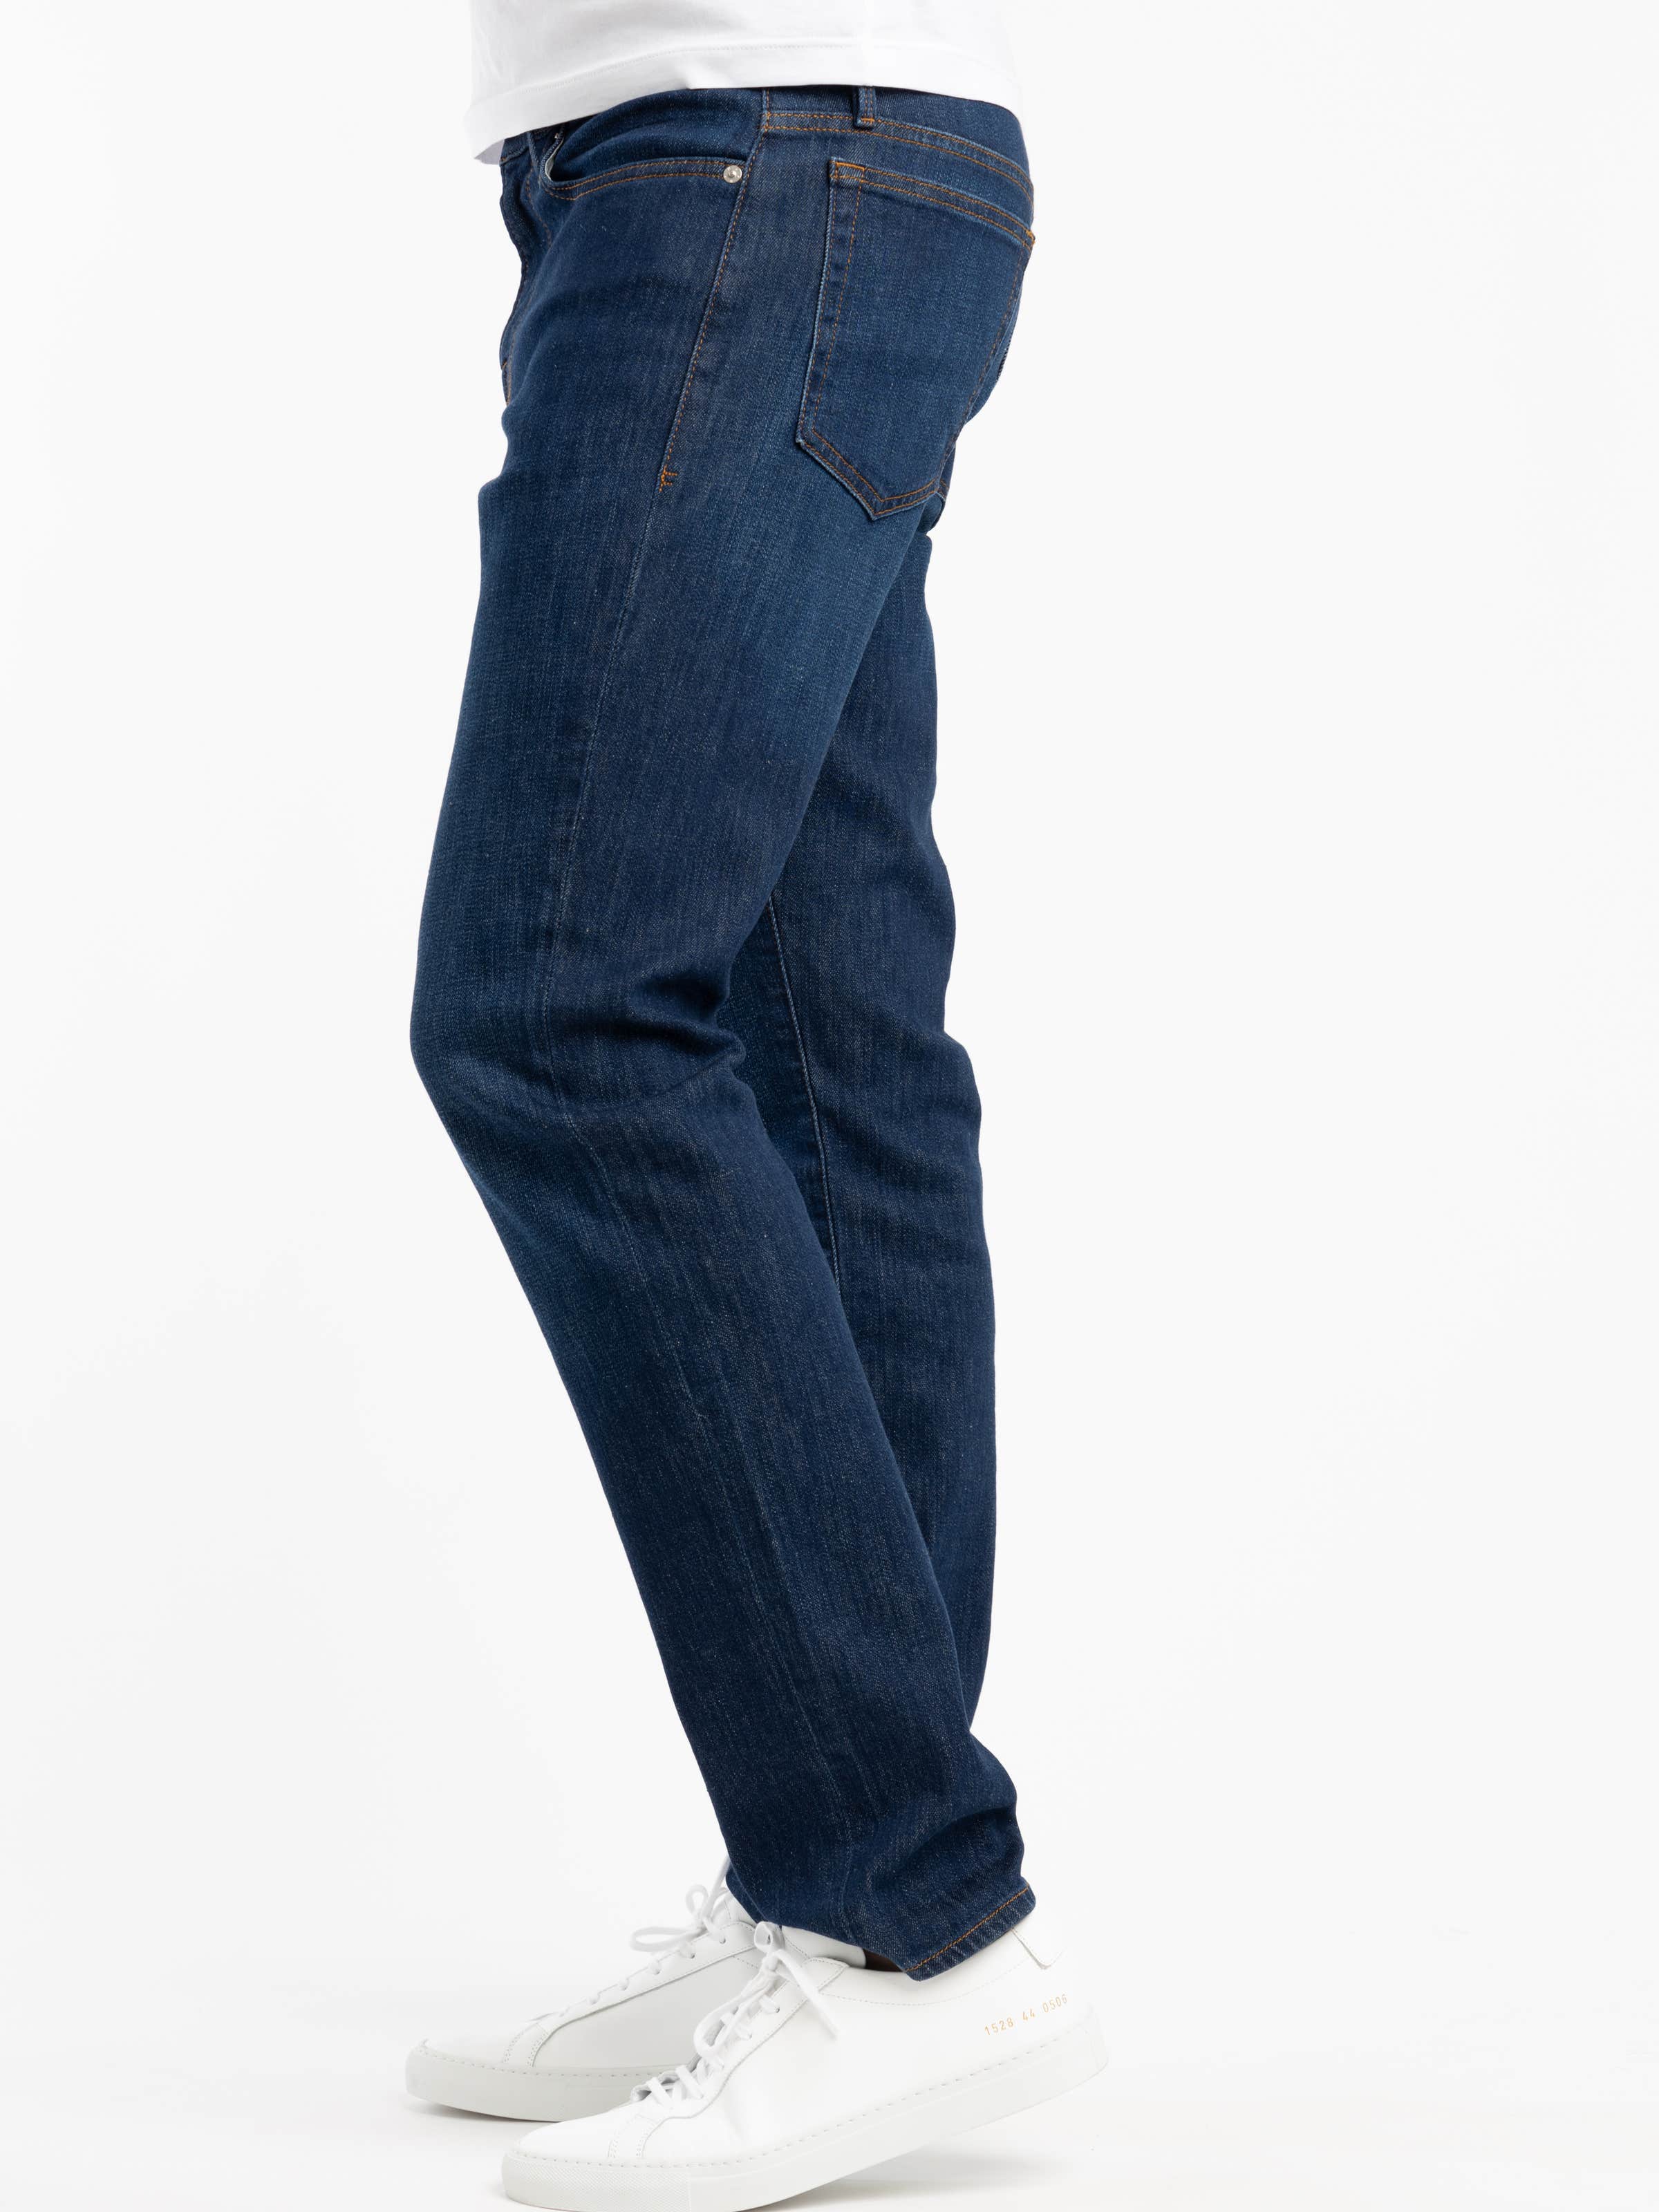 L'Homme Wind City Slim Jeans